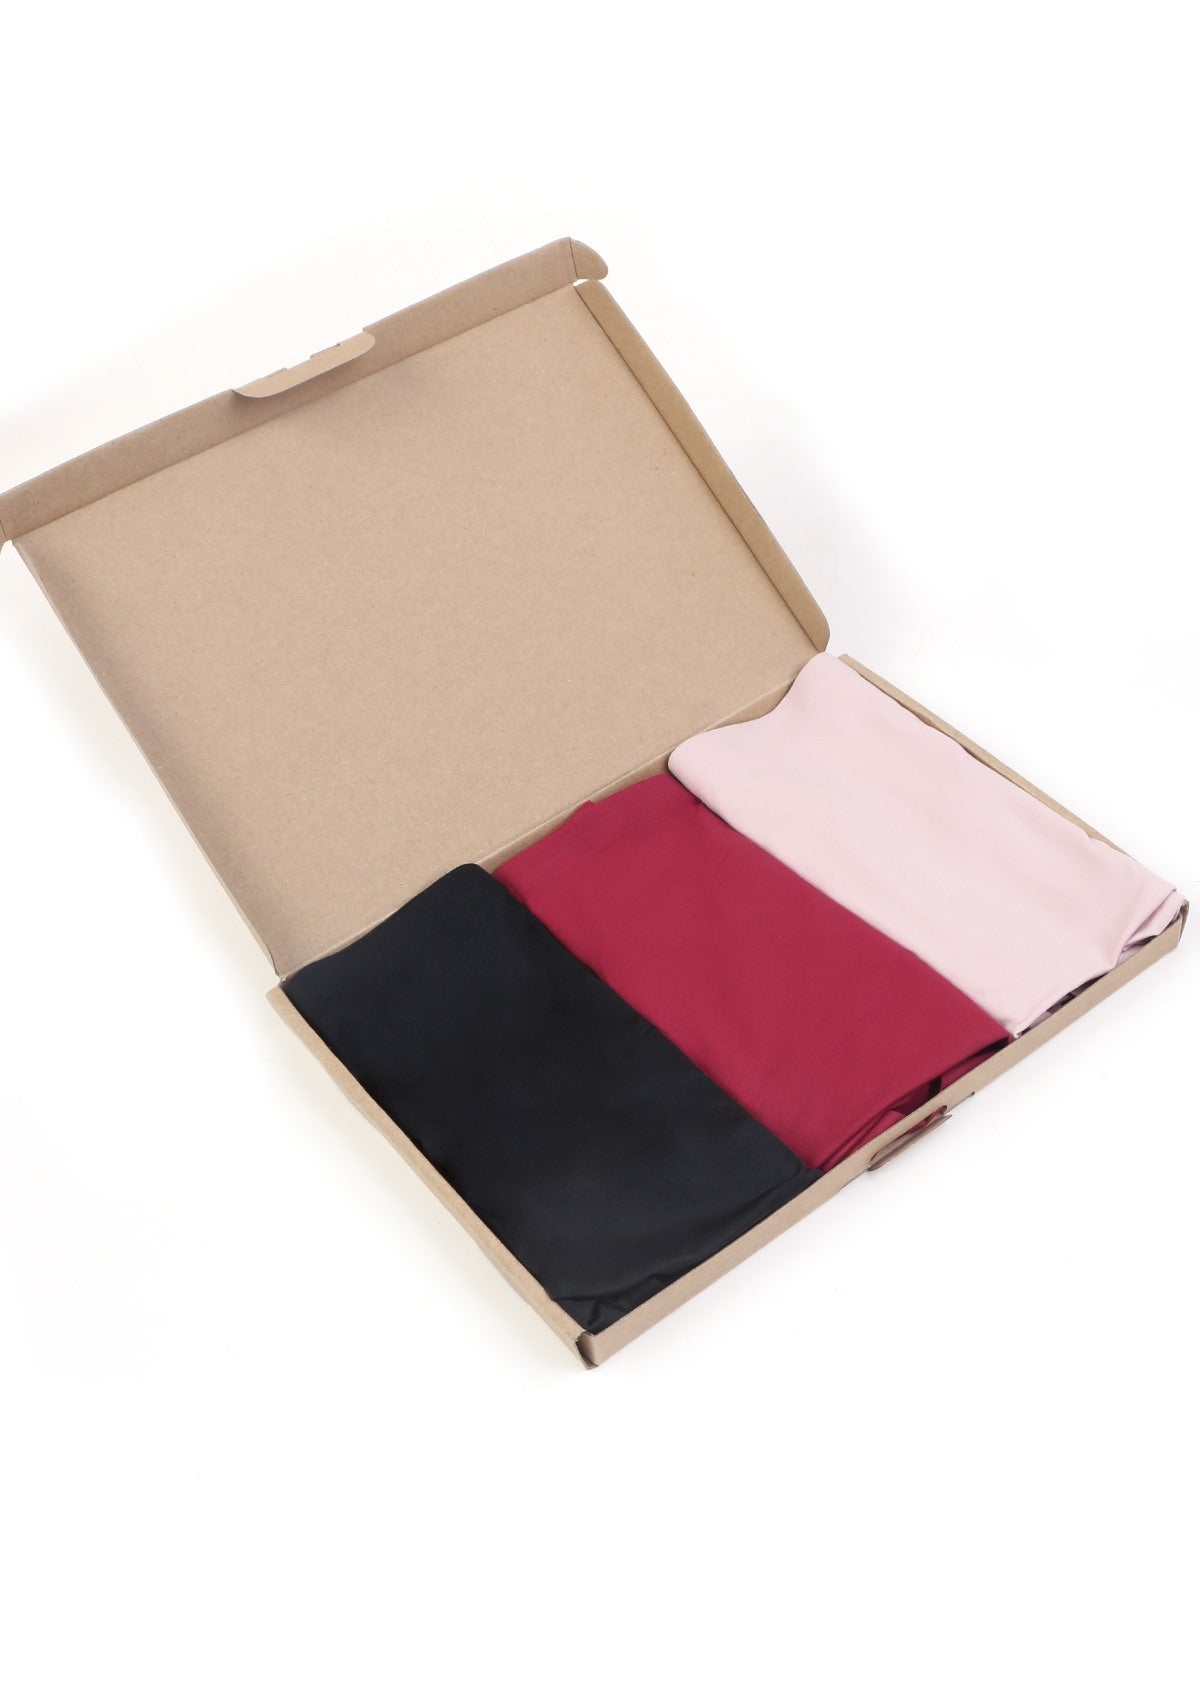 HSIA CoolFit Soft Stretch Seamless Brief Underwear Bundle - 10 Packs/$35 / ①(S-L) / Black+Peach Beige+Red+Dusty Rose+Gray